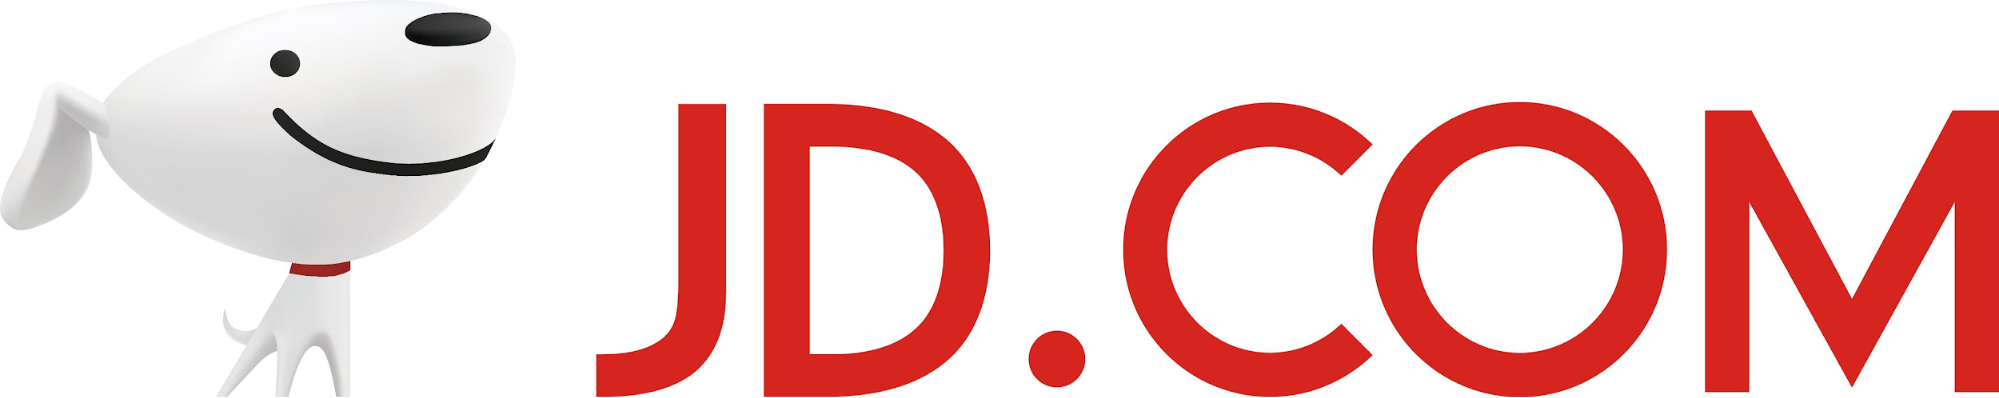 Tanukishop com. JD.com лого. Логотипы компаний. Jingdong Mall логотип. JD Global logo.